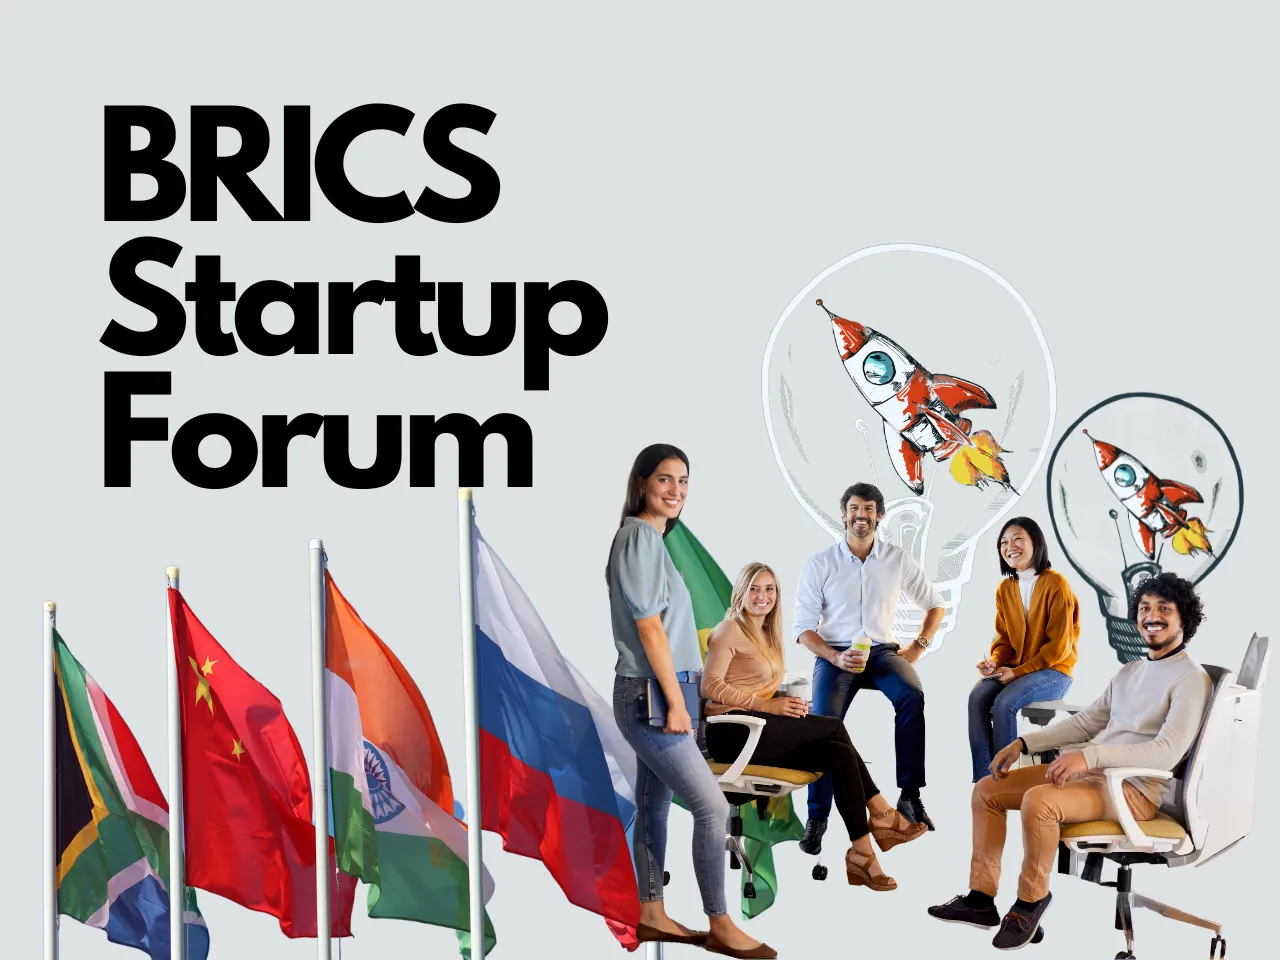 BRICS Startup